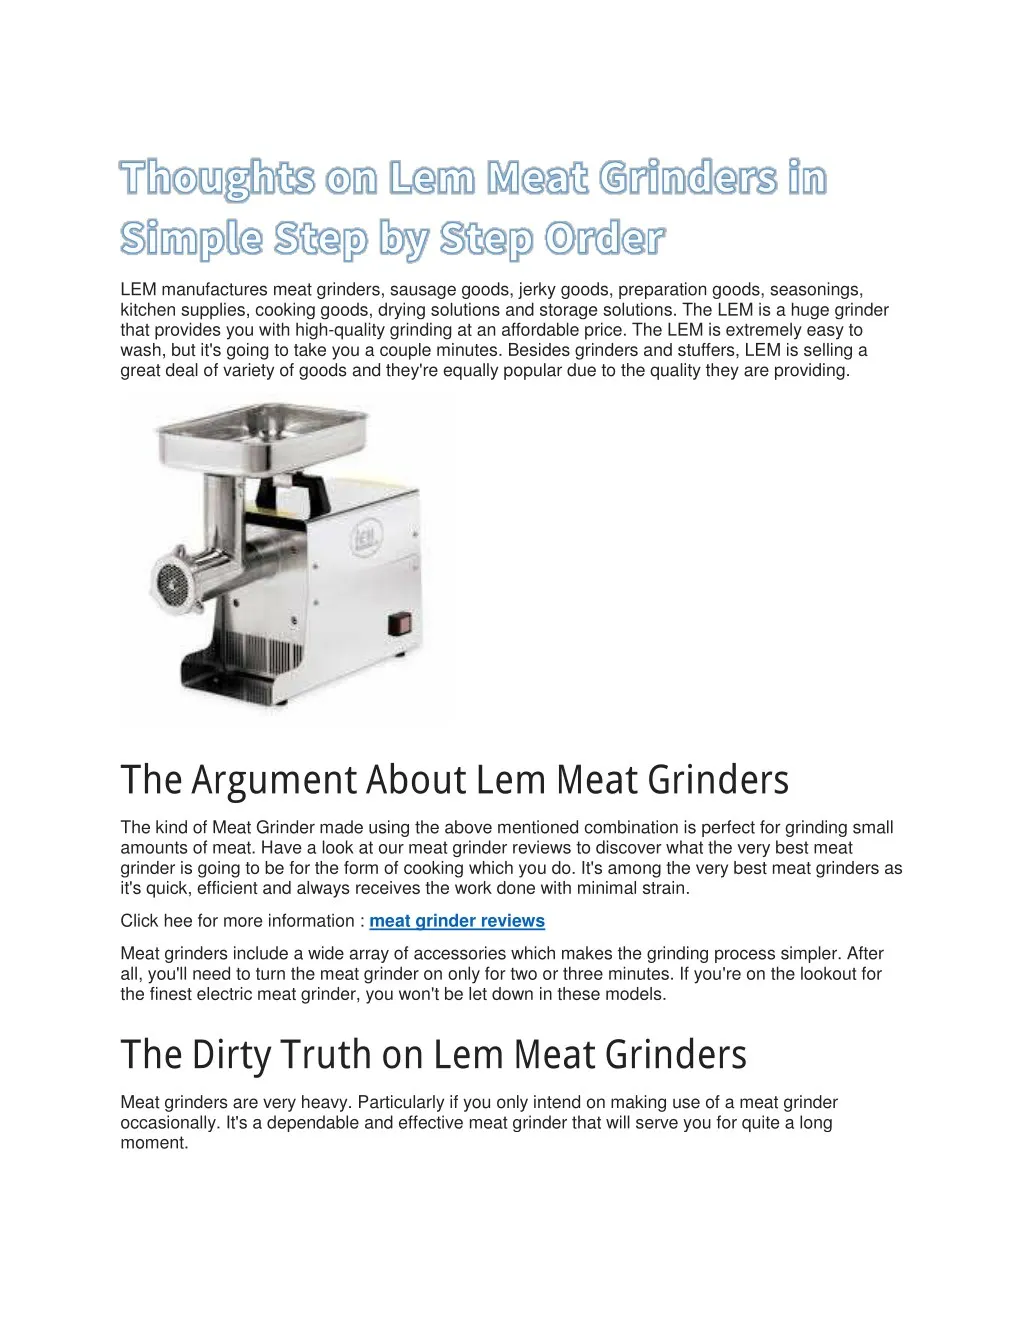 lem manufactures meat grinders sausage goods